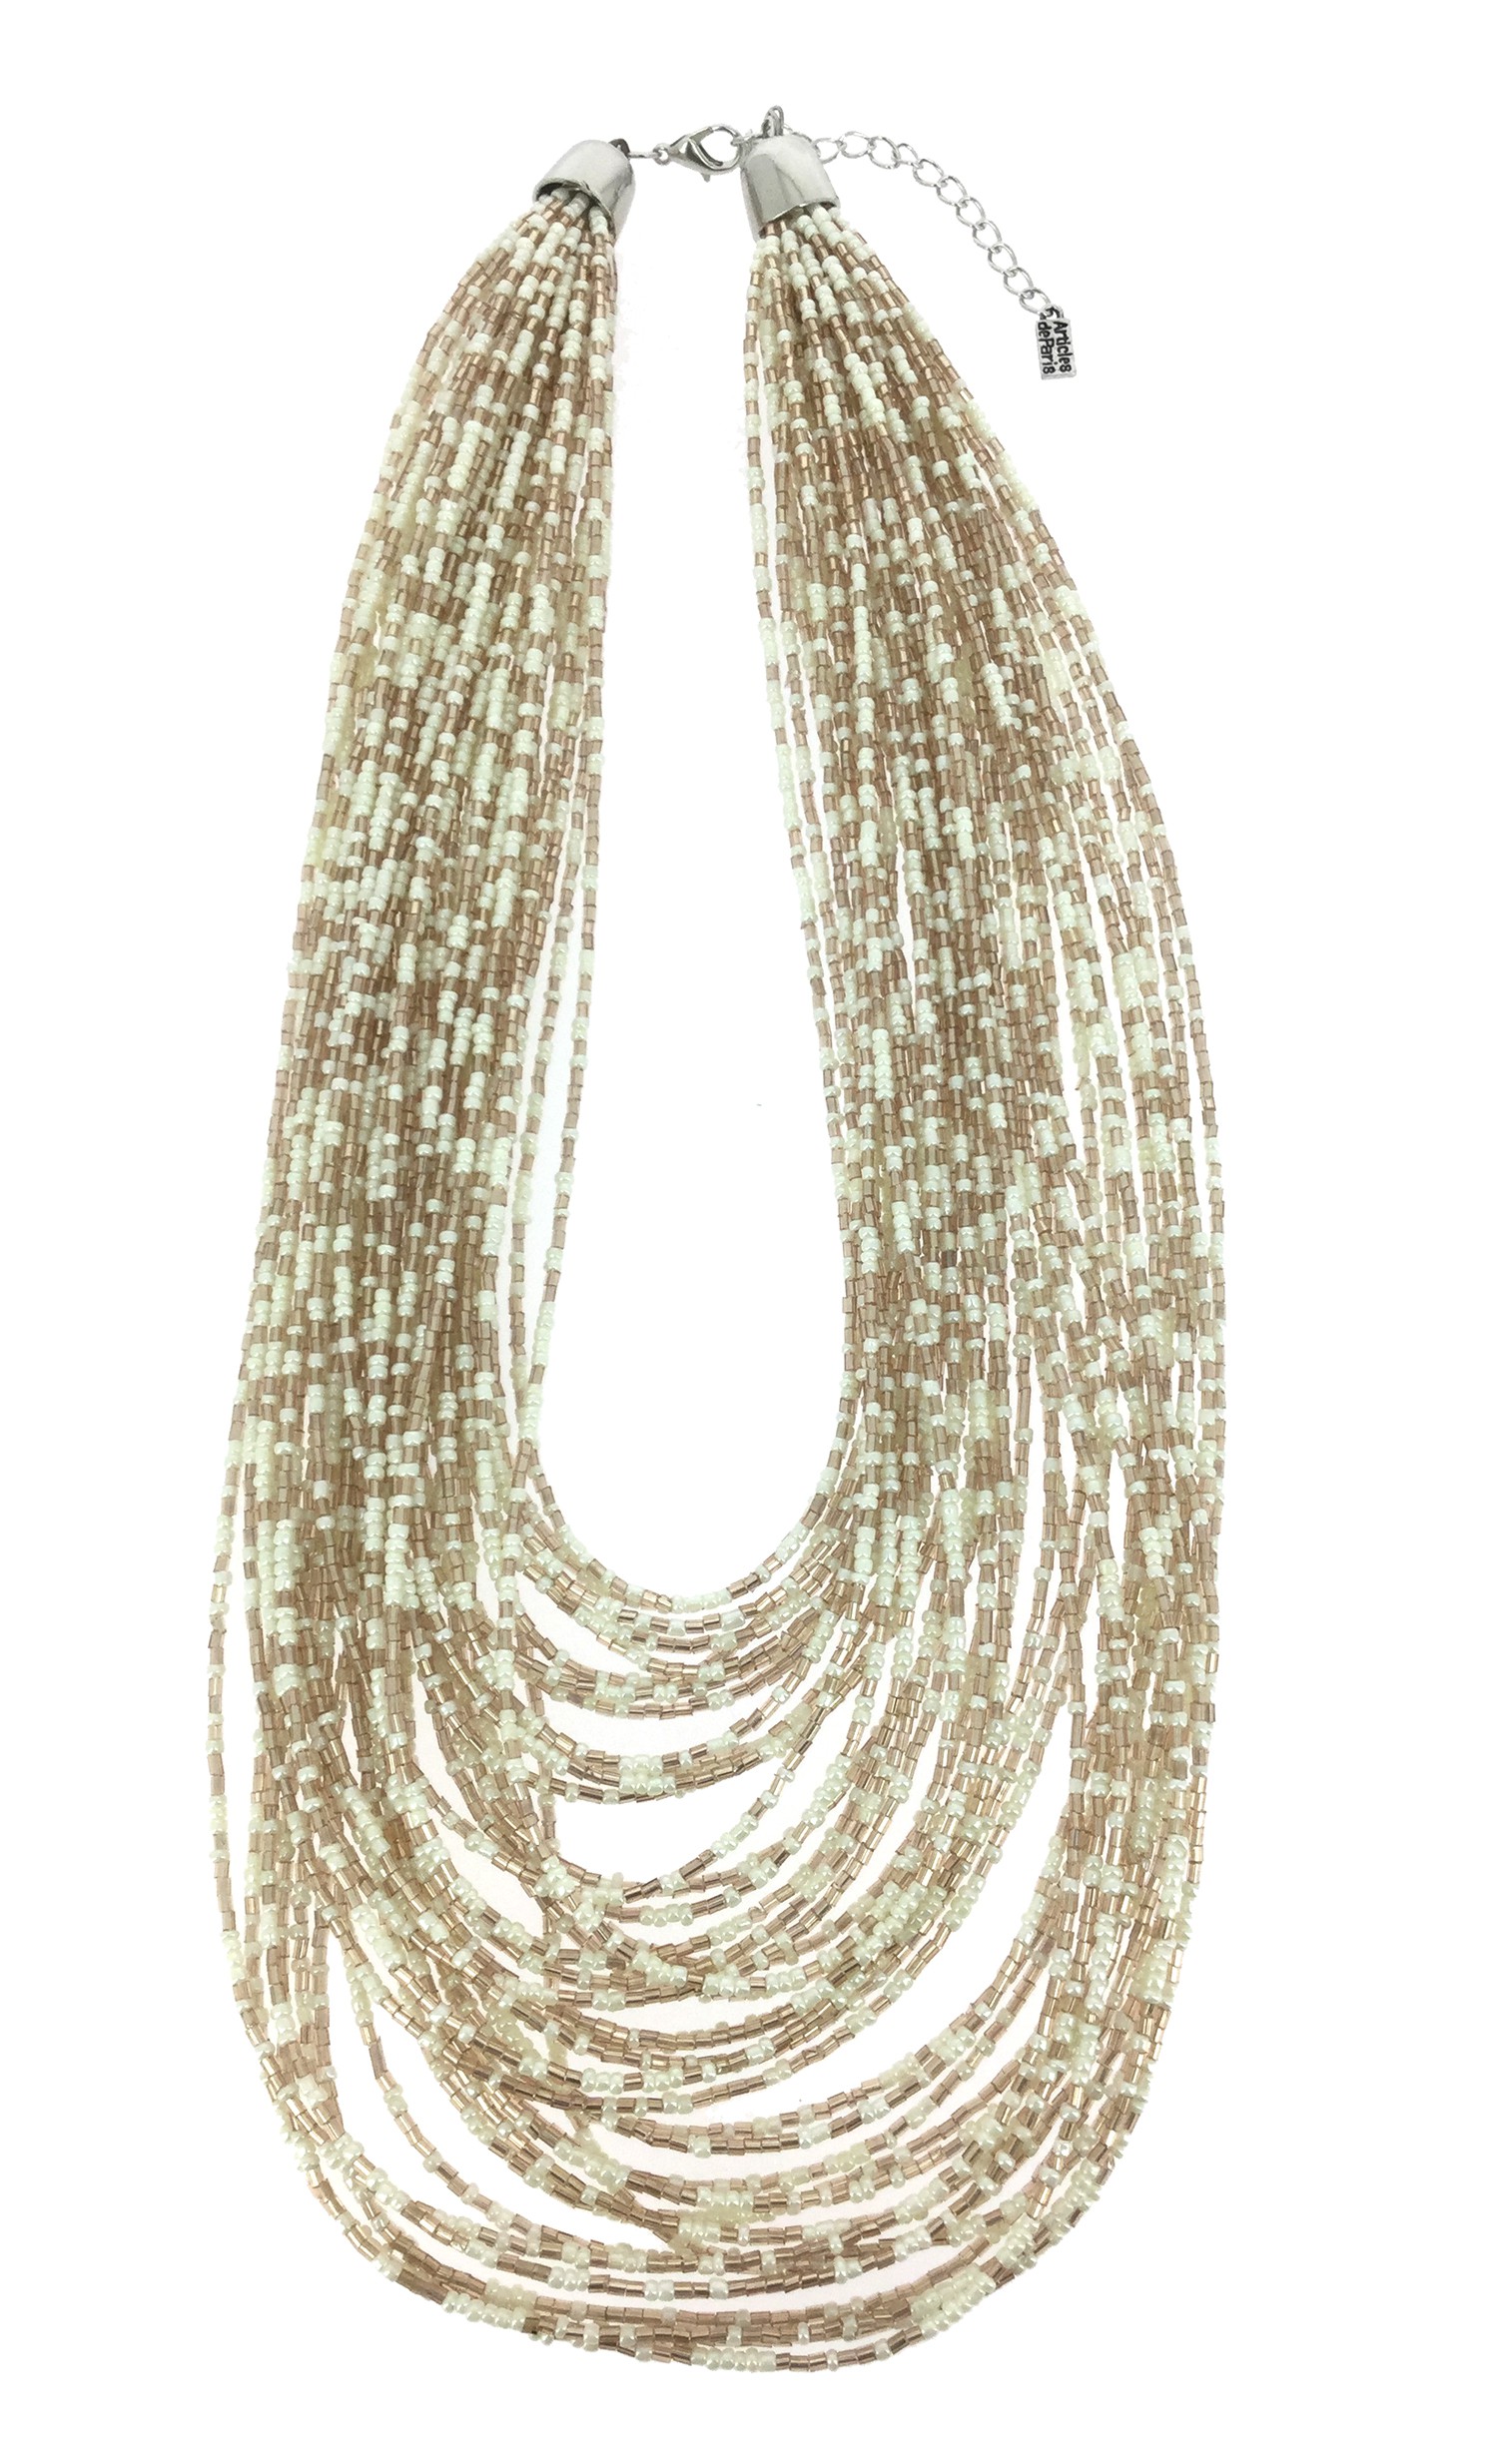 Collier Long - Multirangs perles bicolores.